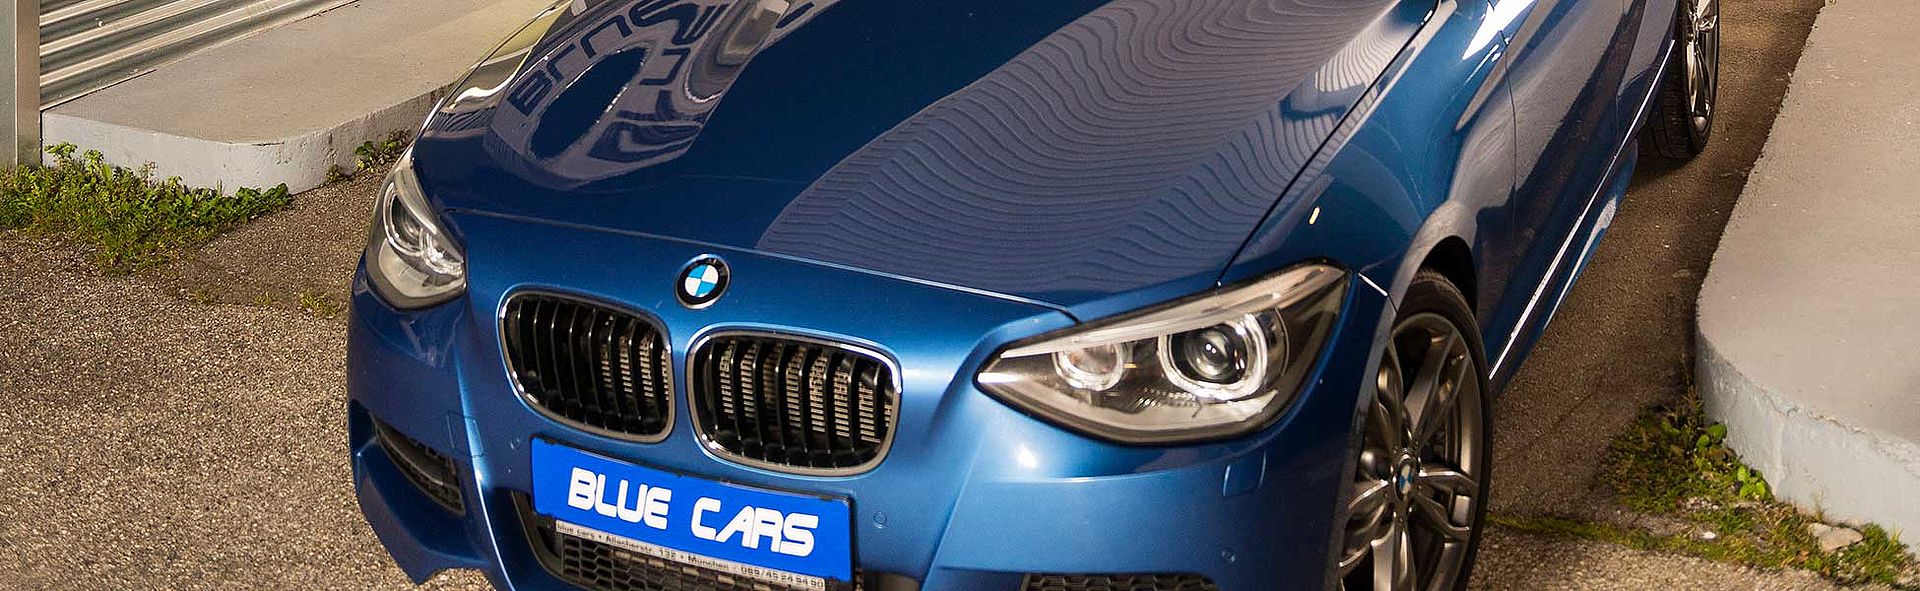 Autos sind unsere Leidenschaft. - blue cars